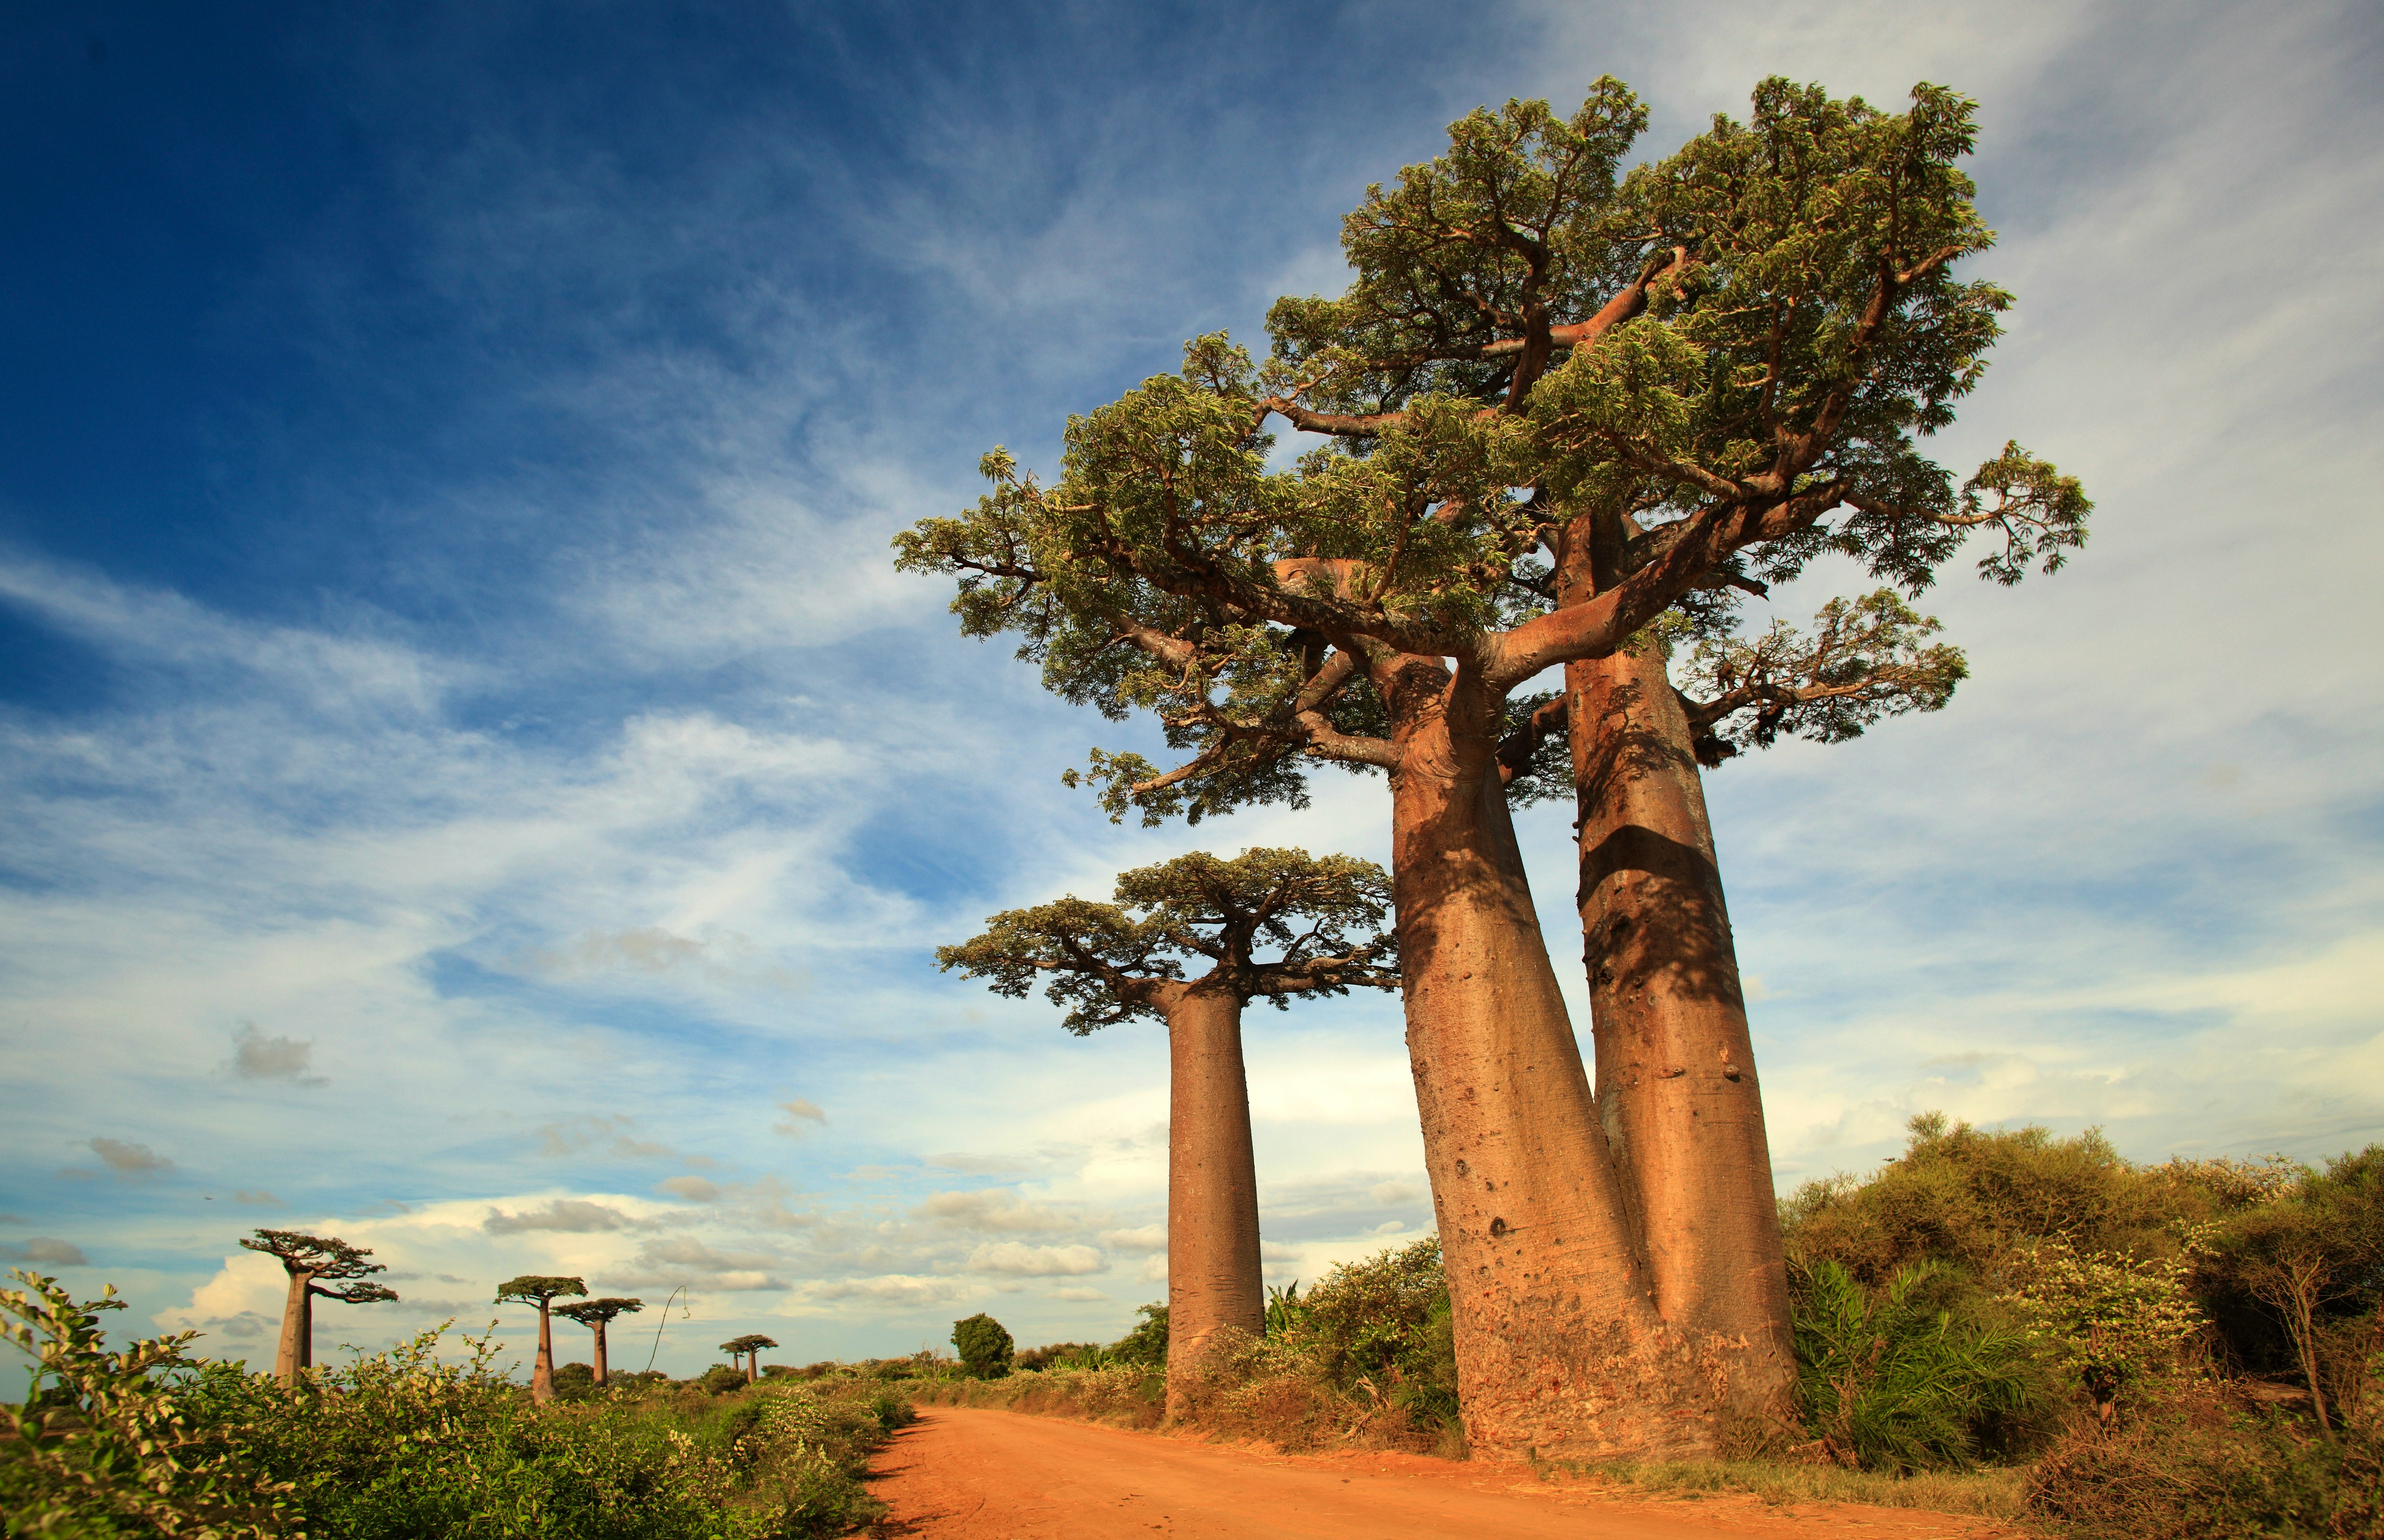 allee des baobabs - alley of baobabs, madagascar – © P. Randriamanampisoa - Fotolia